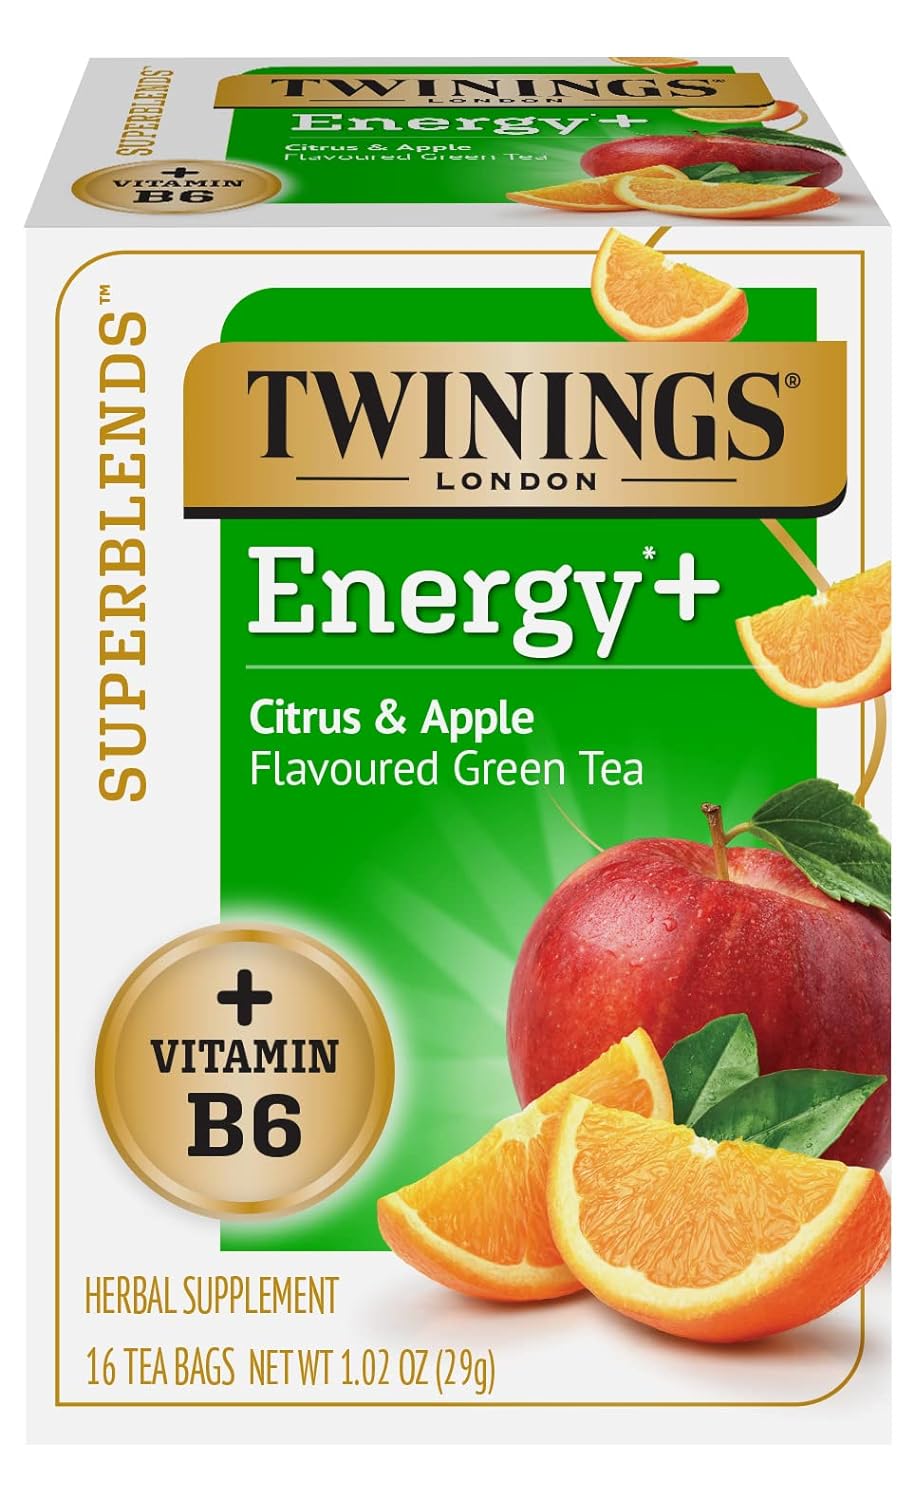 Twinings Superblends Energy+ Herbal Tea with Vitamin B6, Citrus & Apple Caffeine-Free Green Tea, 16 Tea Bags (Pack of 6), Enjoy Hot or Iced